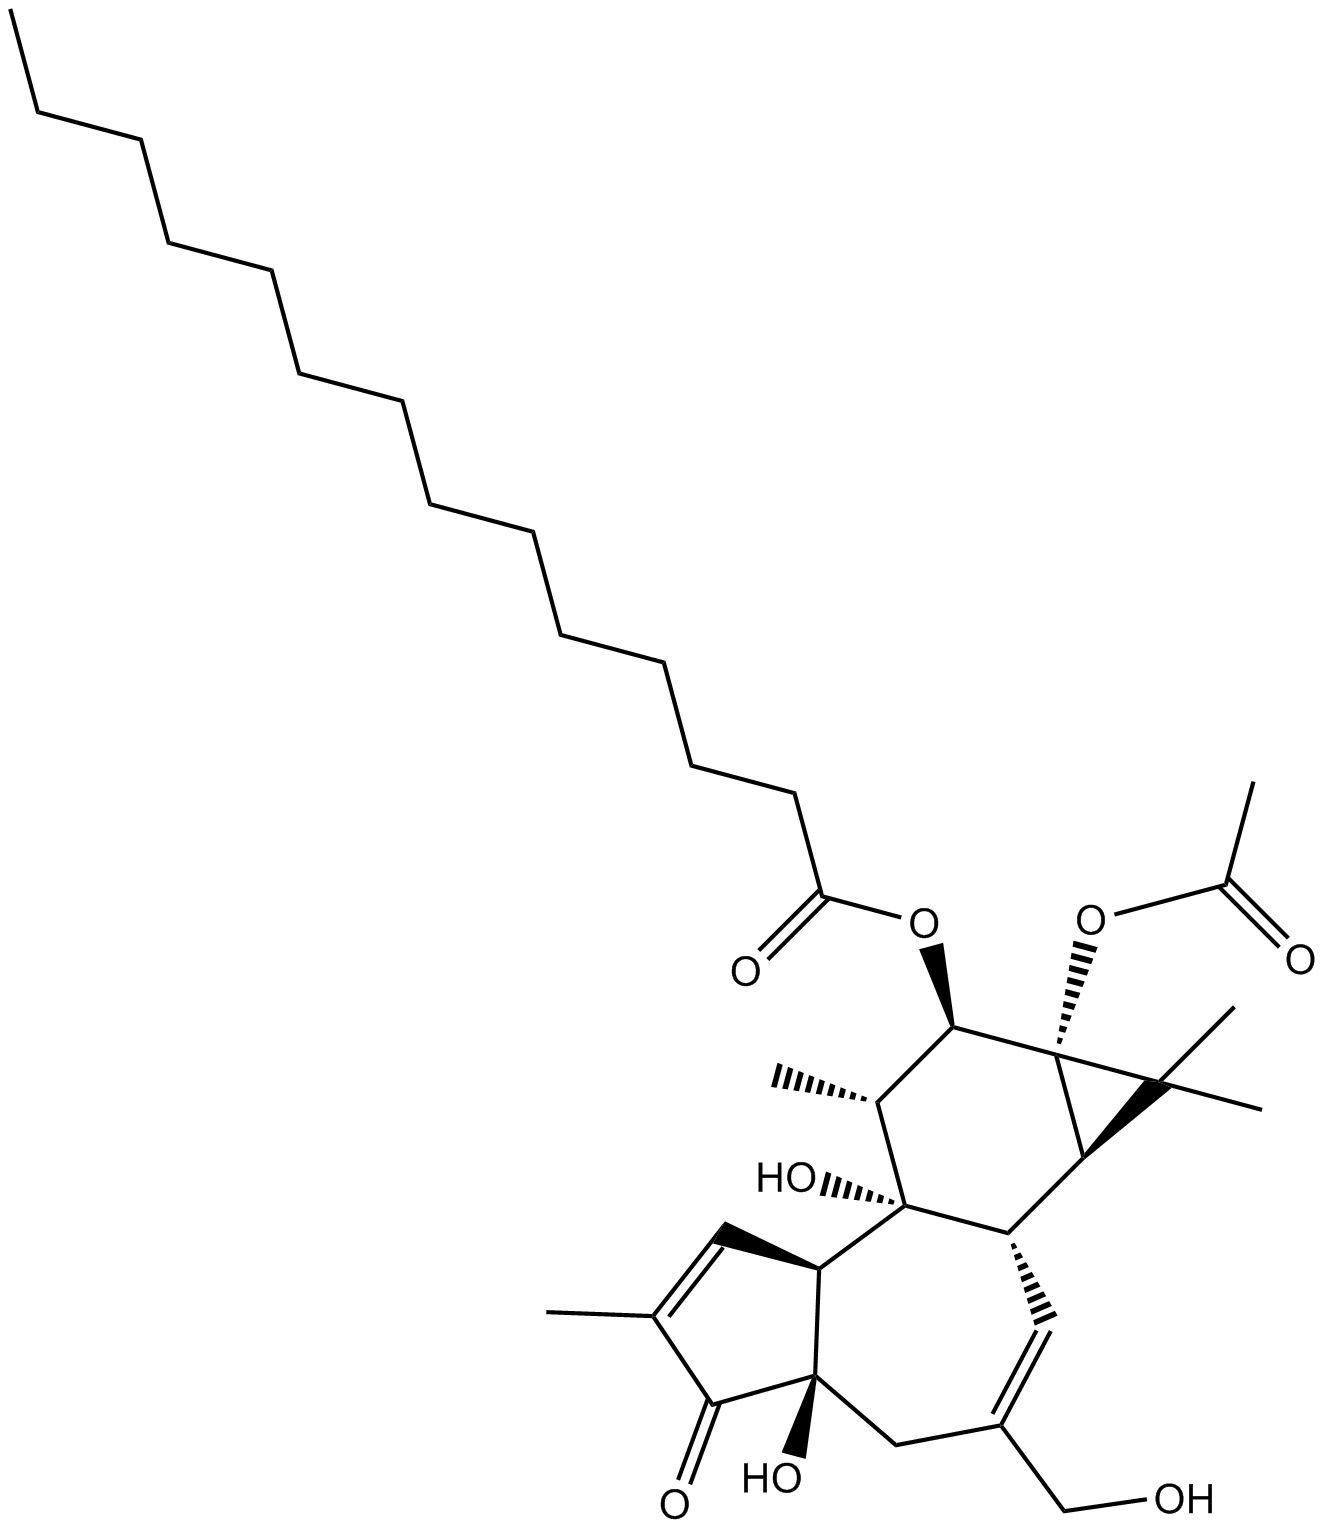 12-O-tetradecanoyl phorbol-13-acetate Chemische Struktur